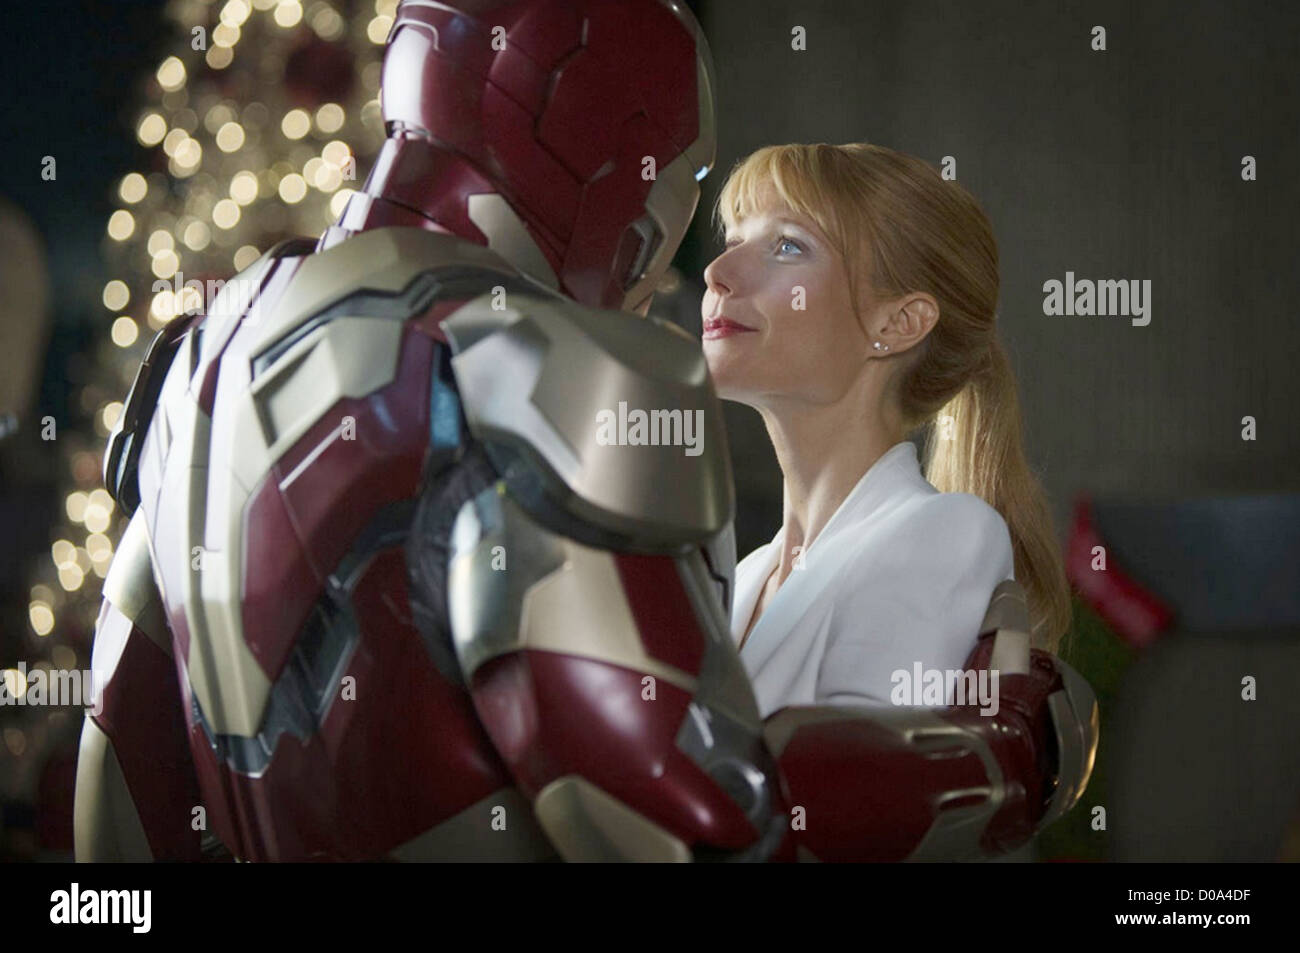 IRON MAN 3 - 2013 MVLFFLLC Marvel film with Robert Downey Jnr as Iron Man and Gwyneth Paltrow as Pepper Potts Stock Photo